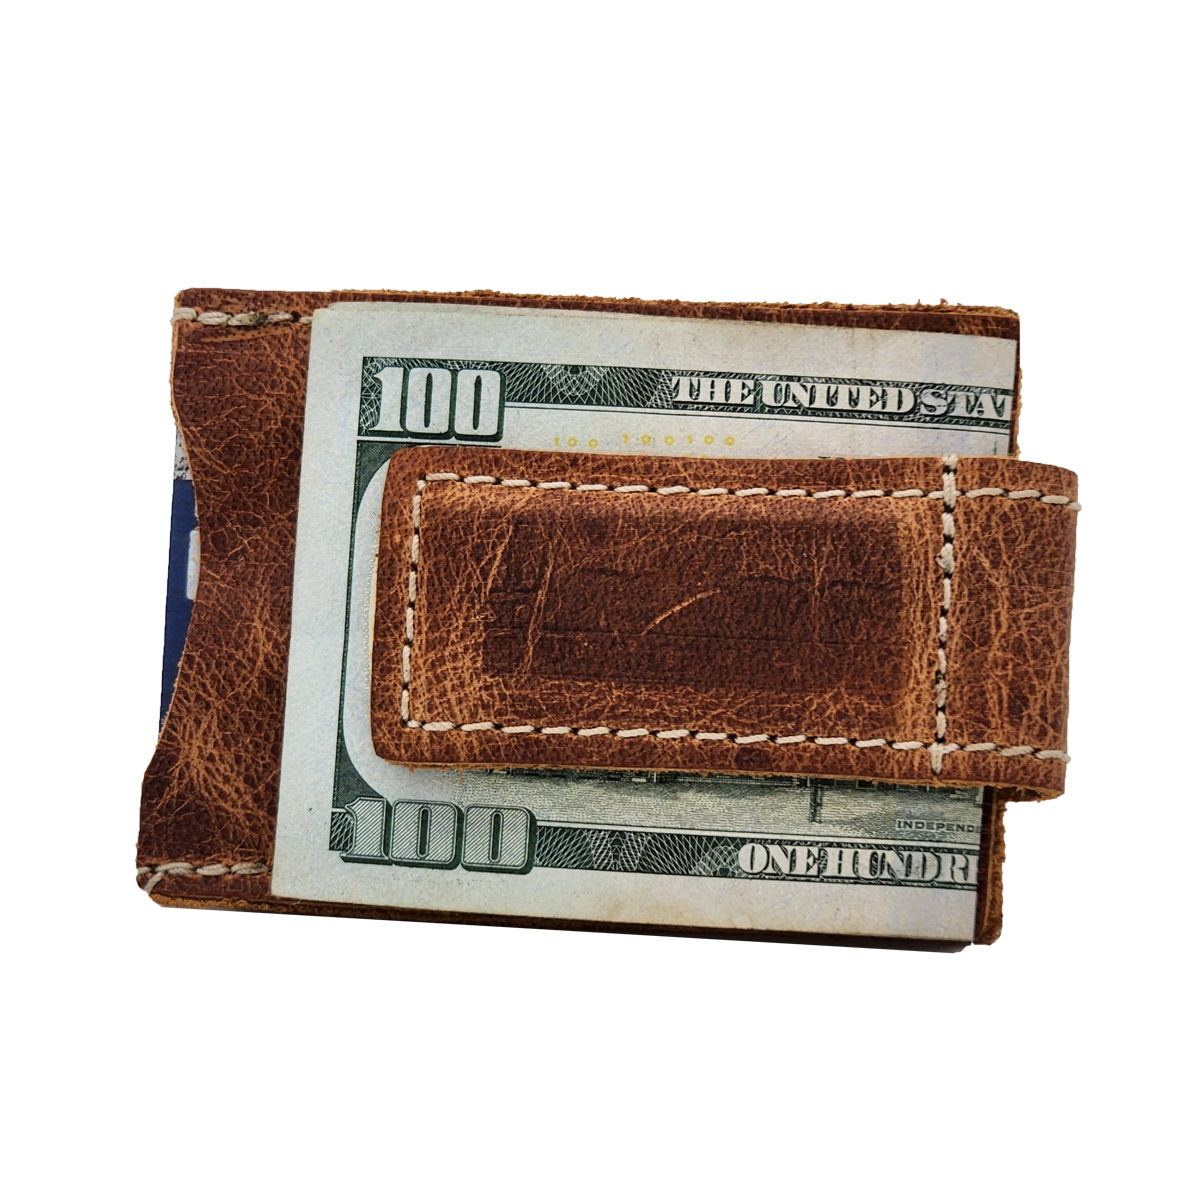 The Minimalist Front Pocket Wallet